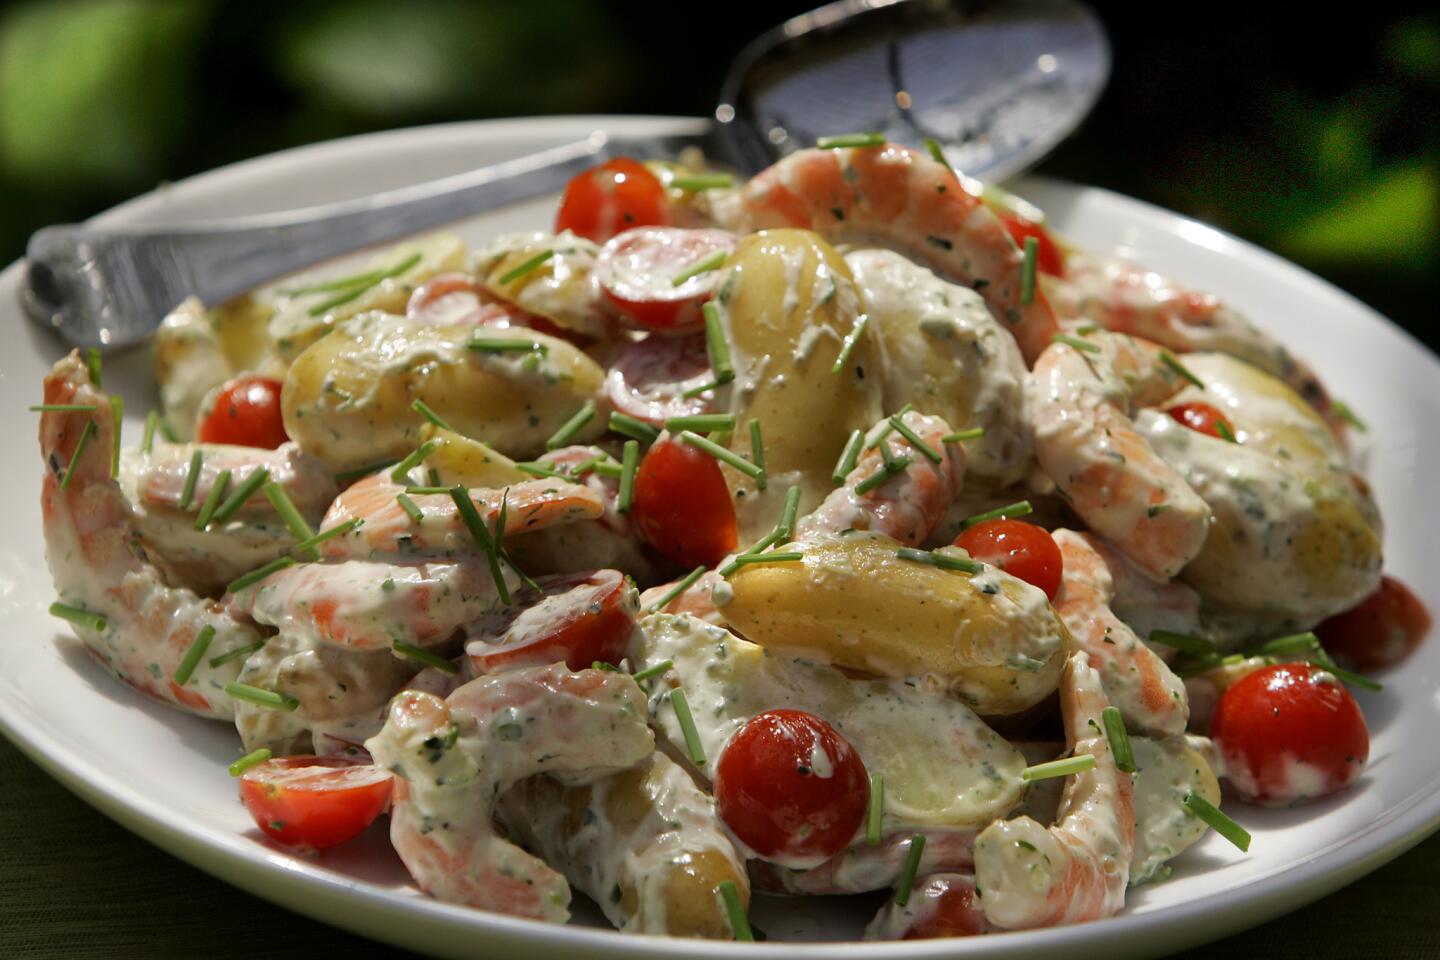 Potato and shrimp salad with green goddess dressing